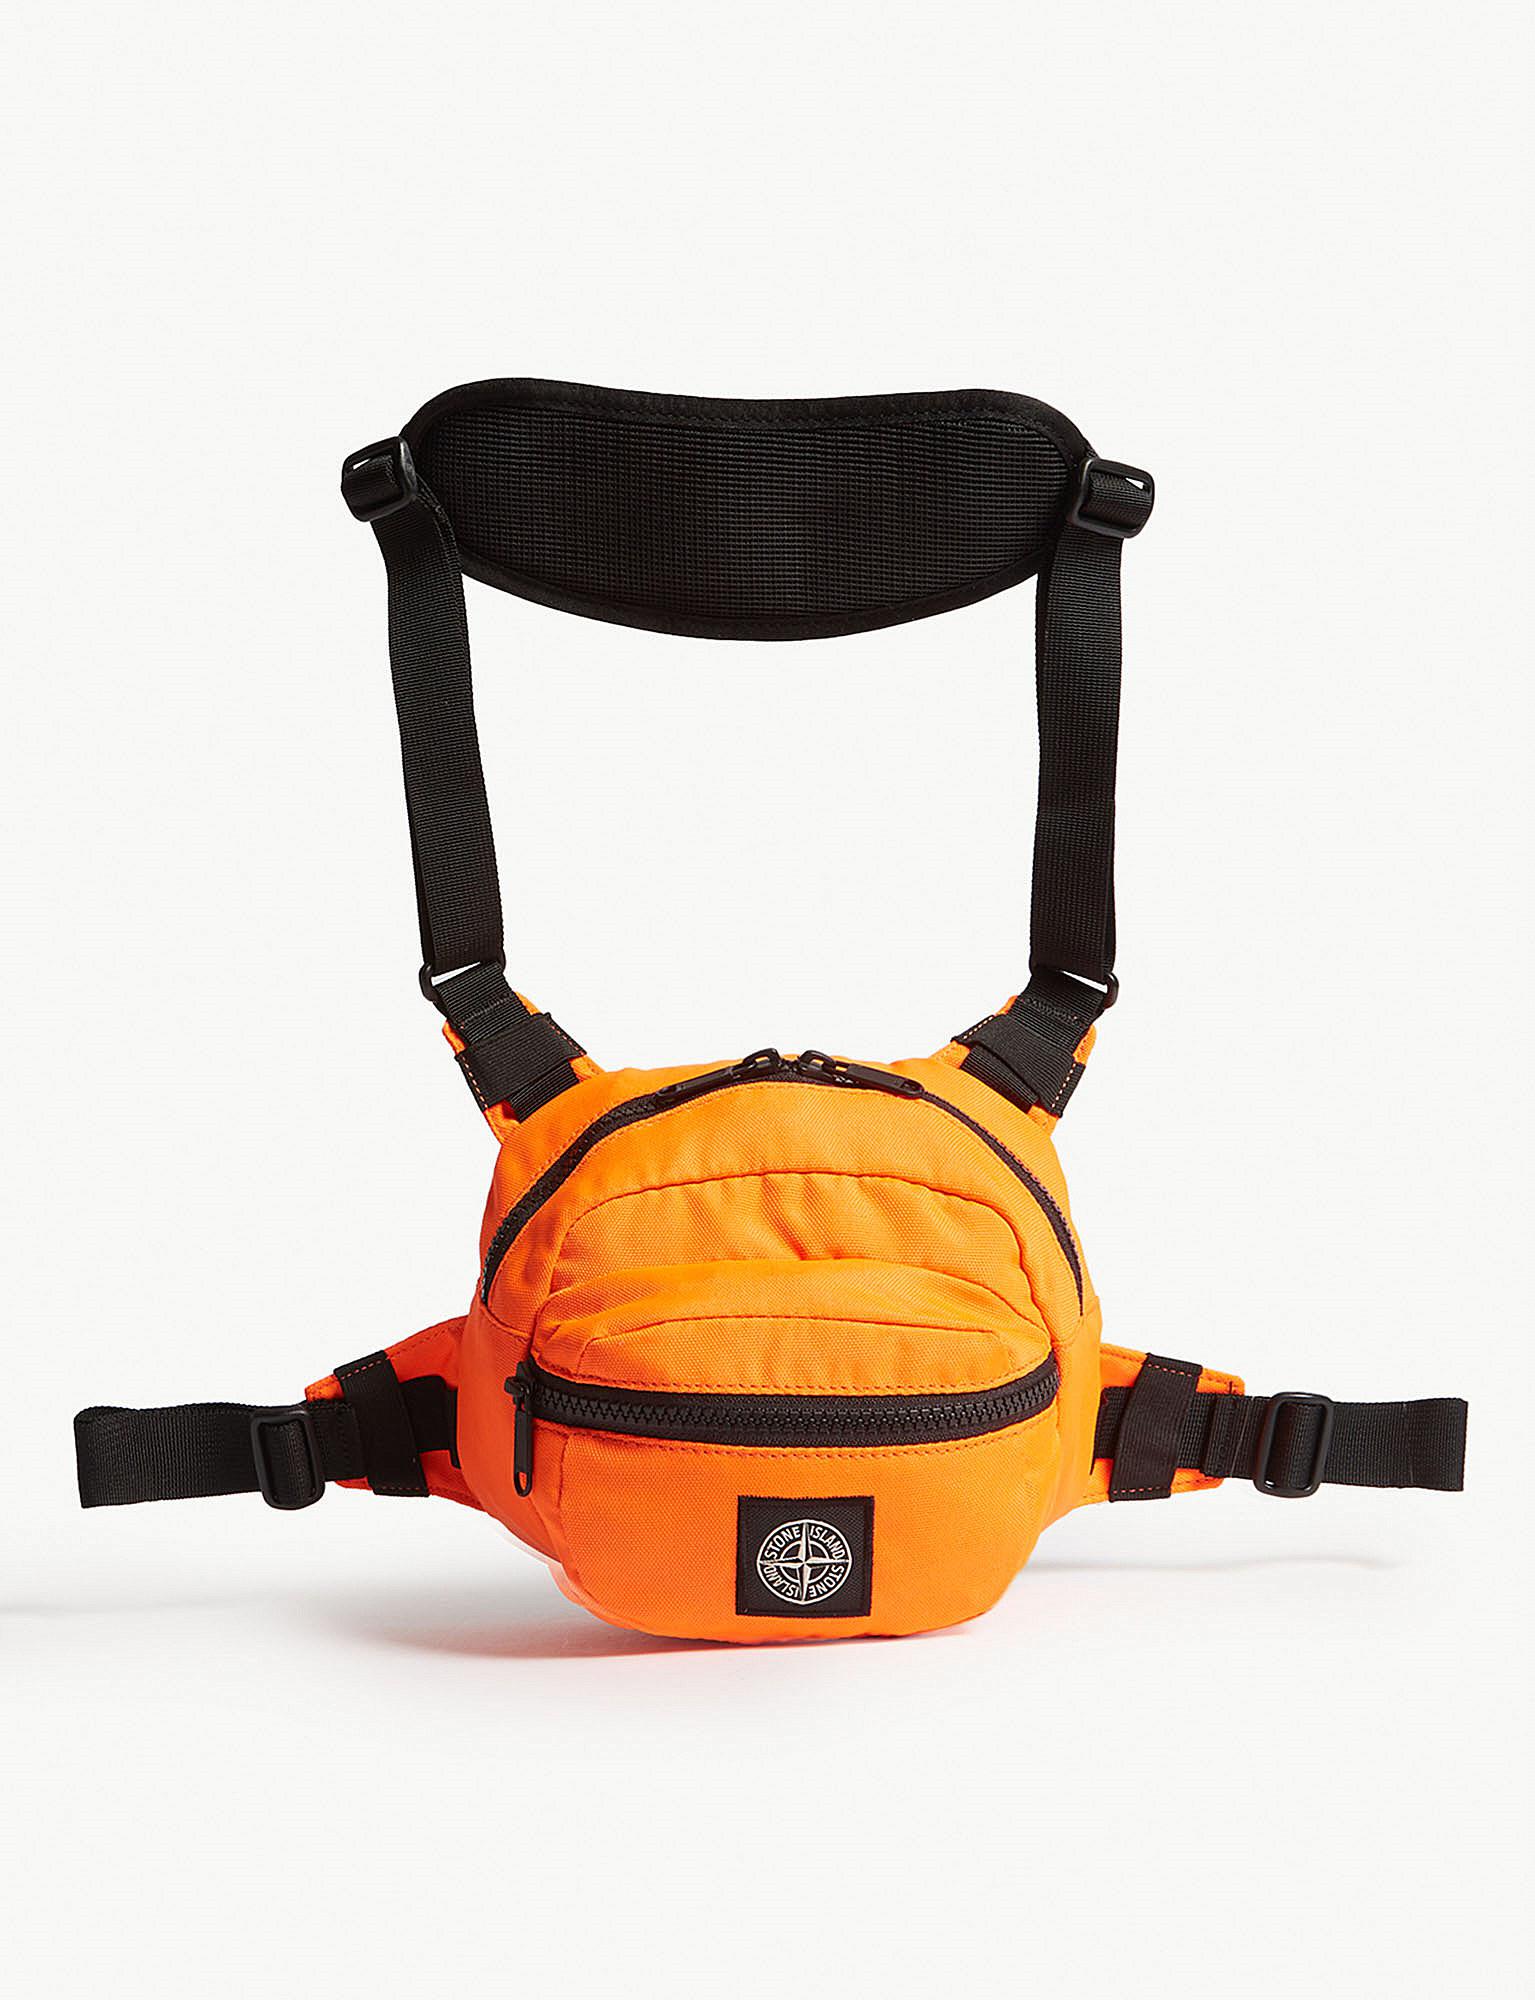 Stone Island Canvas Compass Logo Cross-body Bag in Orange for Men - Lyst